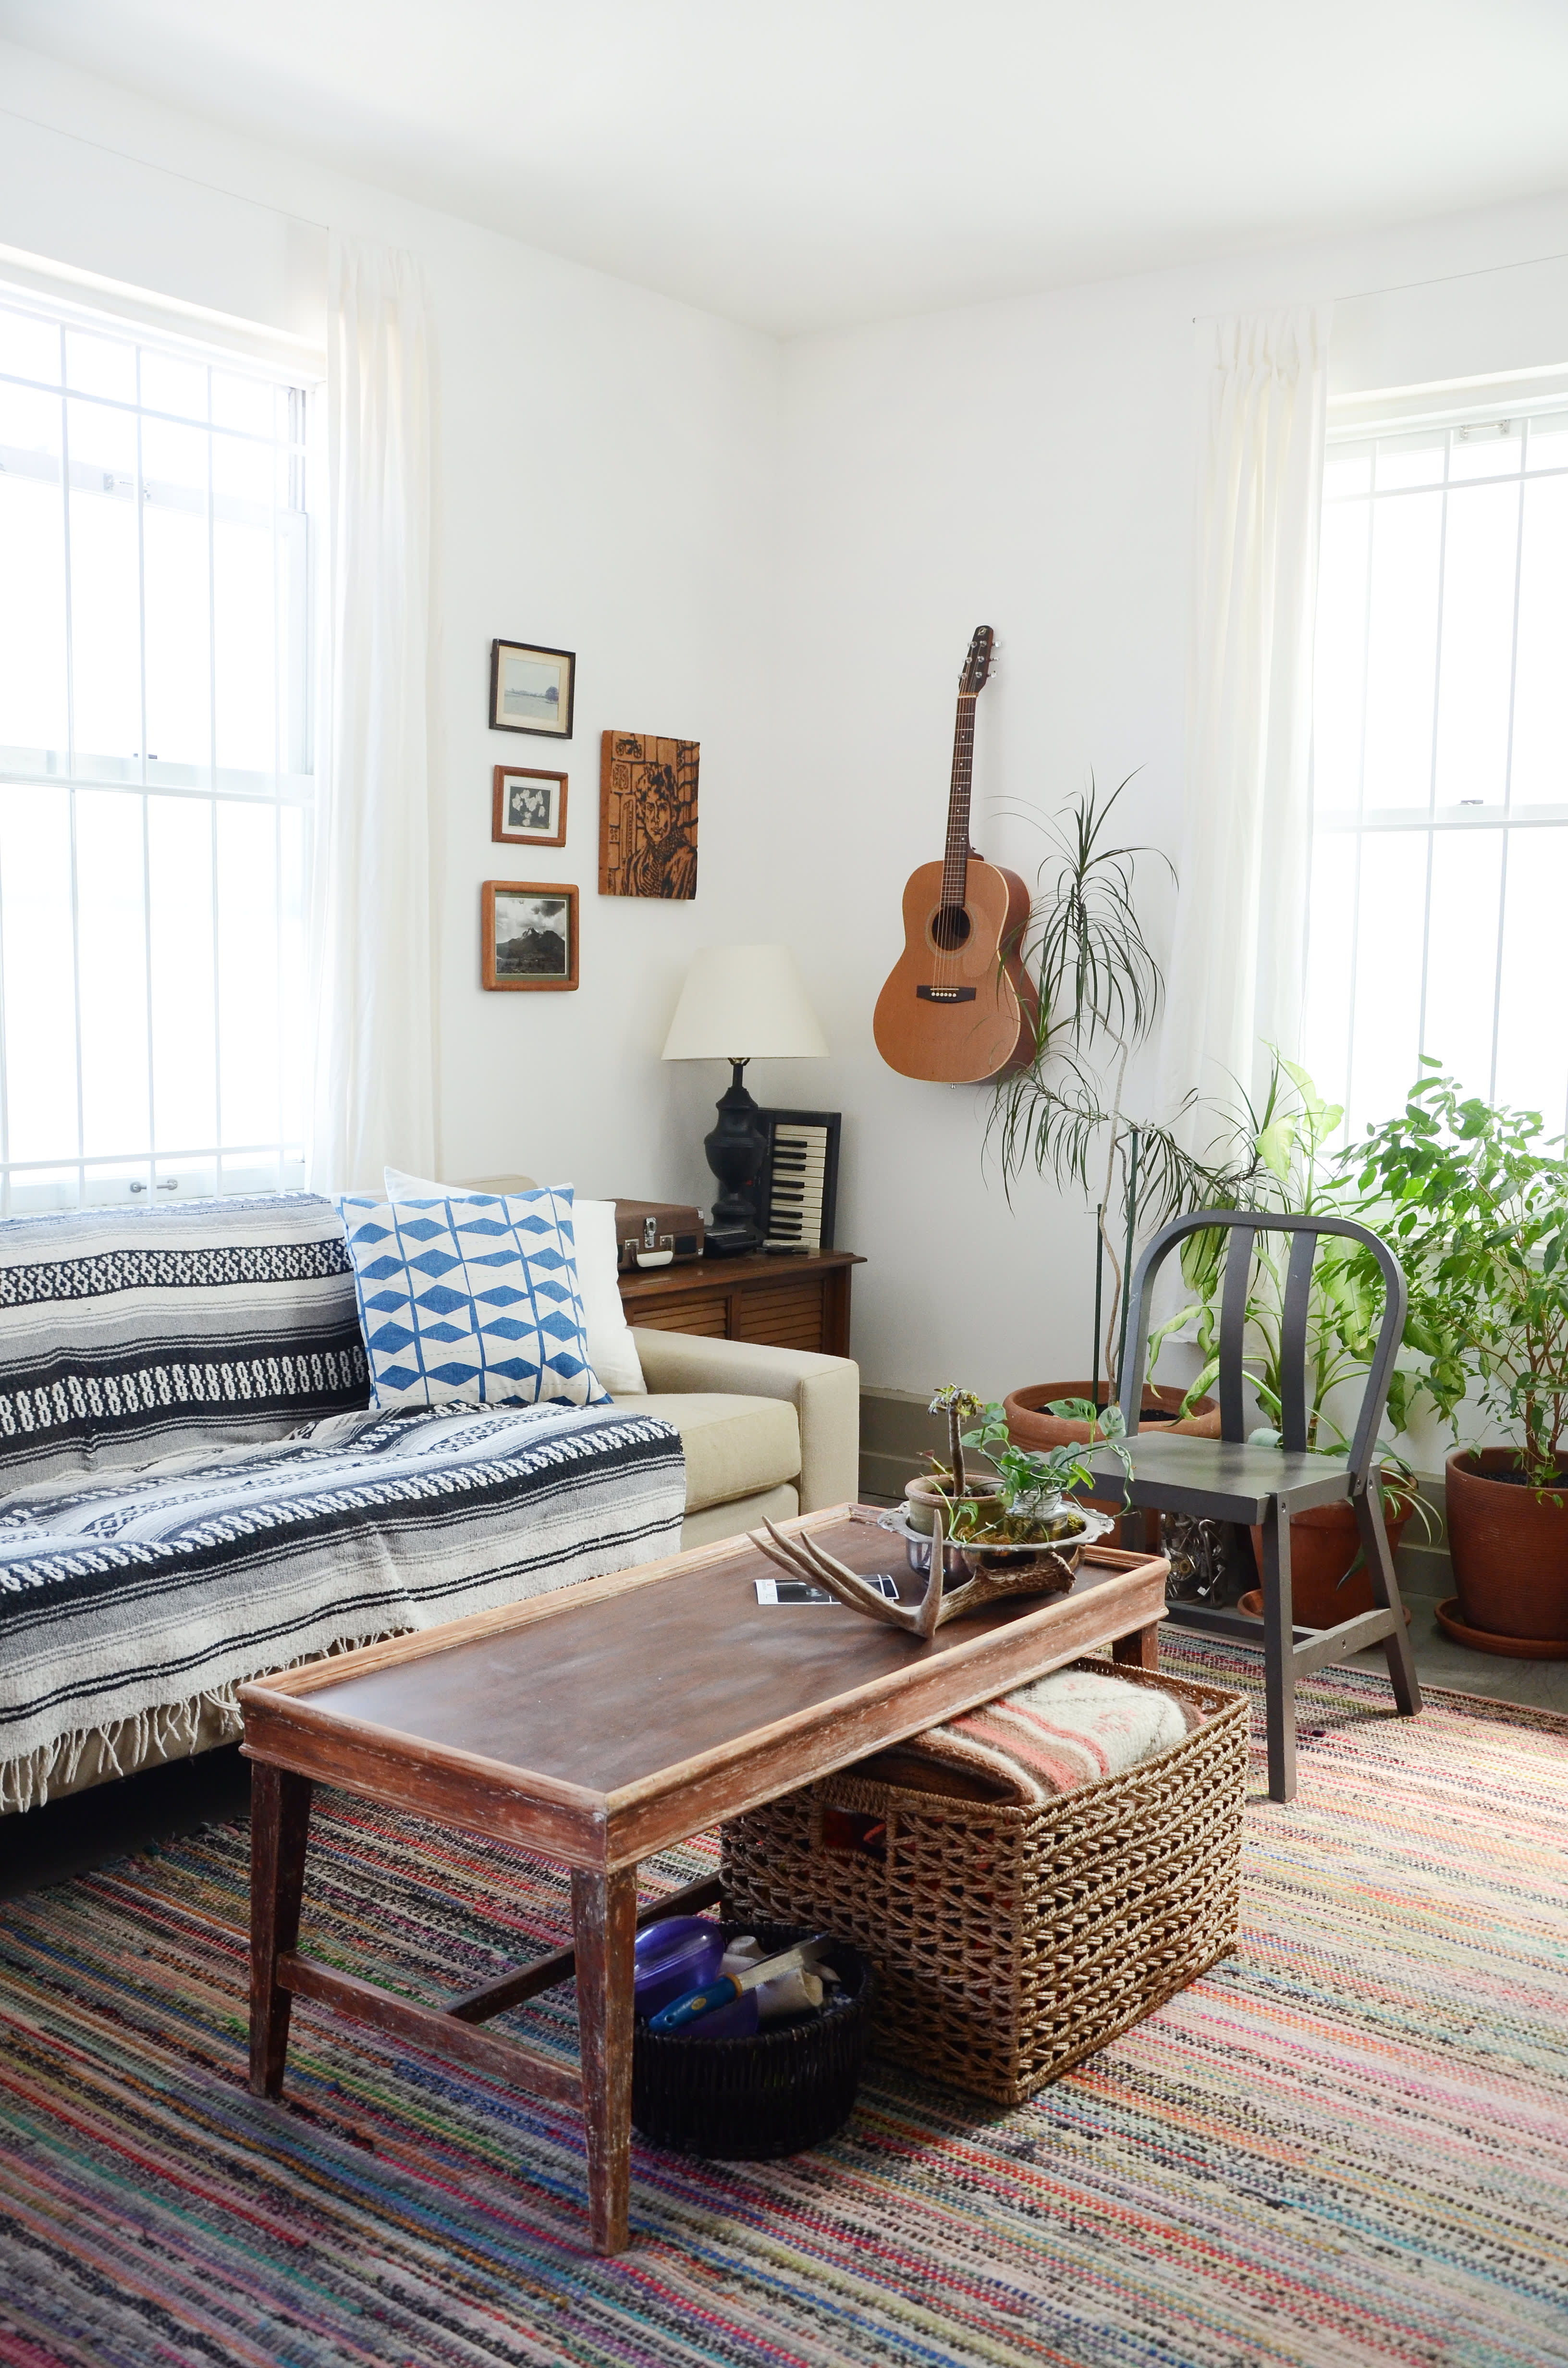 7 Music-Themed Home Decor Ideas You'll Follow